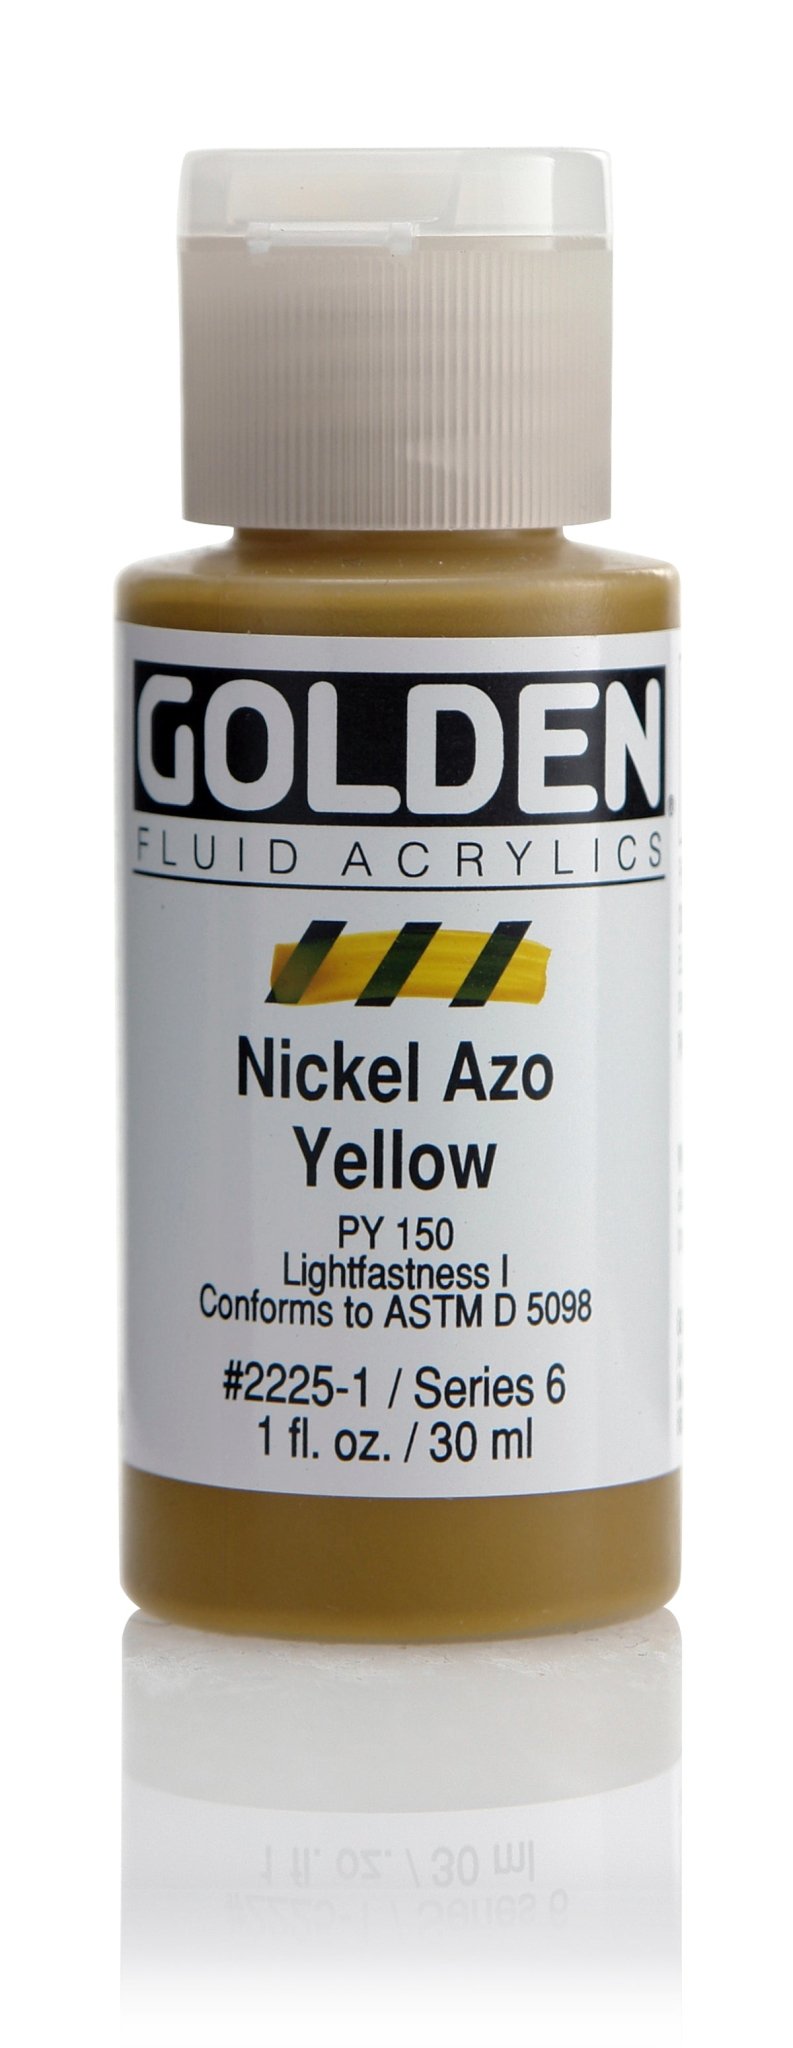 Golden Fluid Acrylic 30ml Nickel Azo Yellow - theartshop.com.au